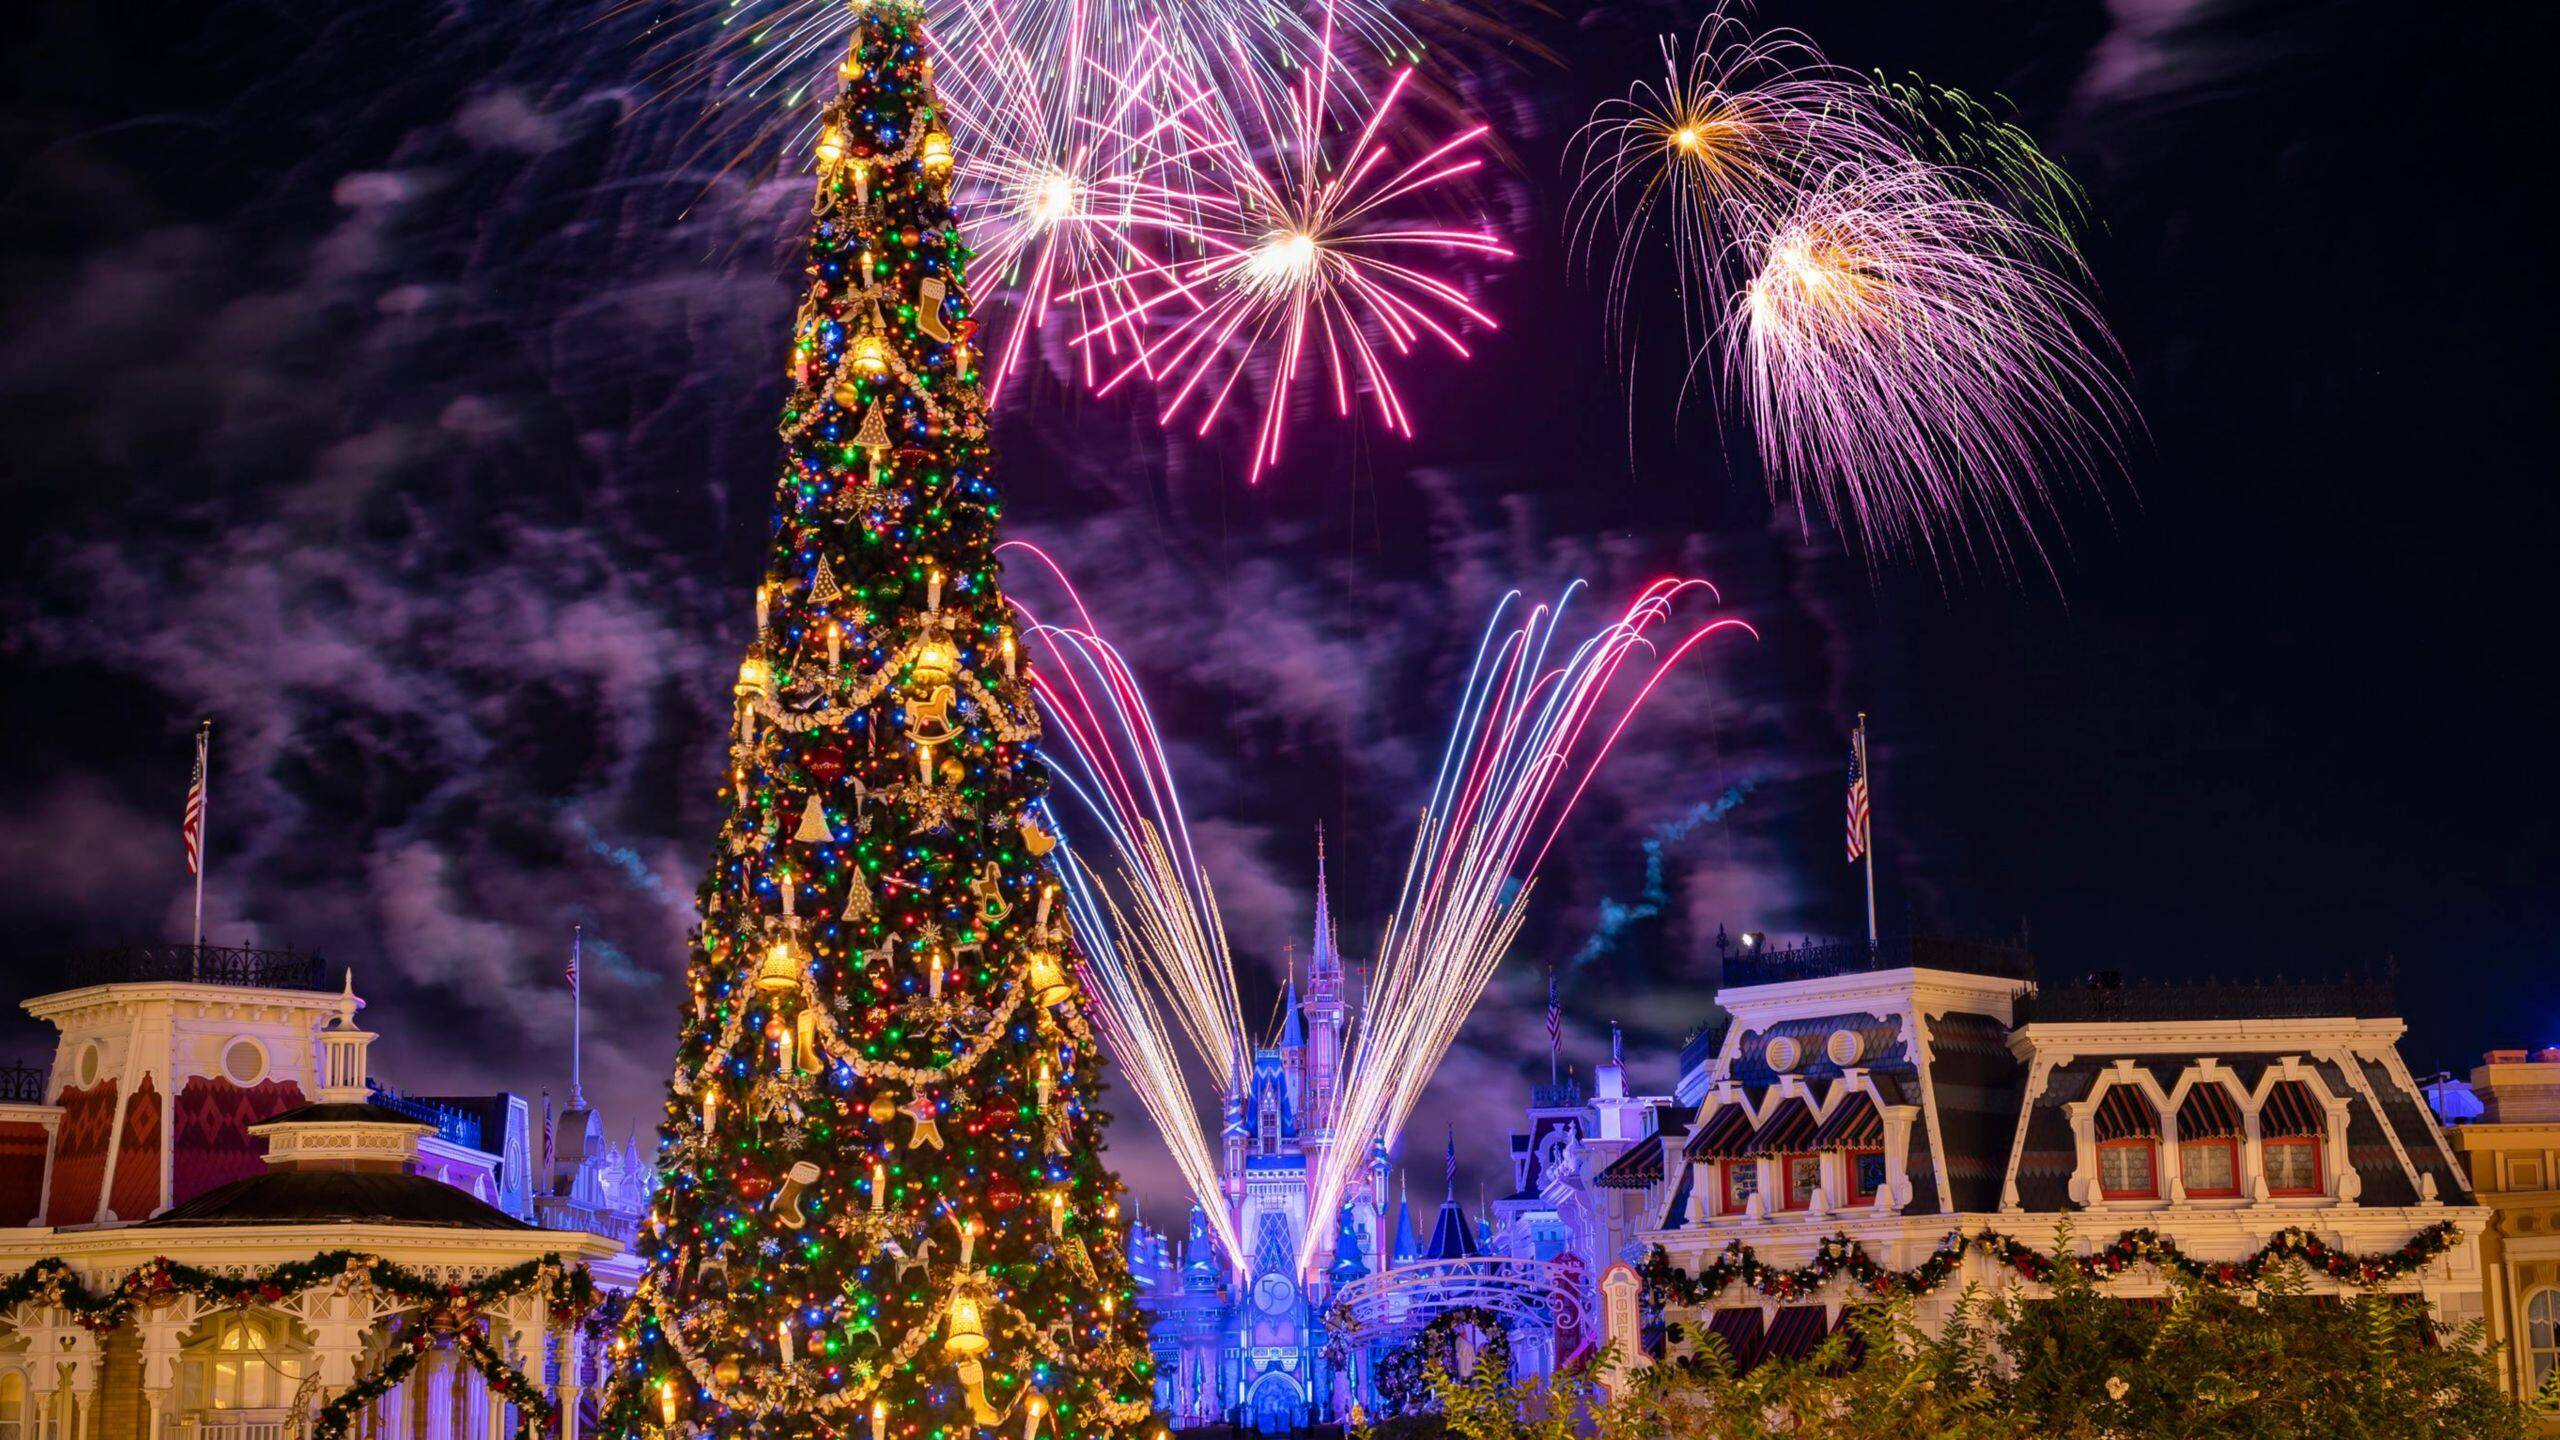 Minnie's Wonderful Christmastime Fireworks Dessert Party returns for 2023 at Walt Disney World